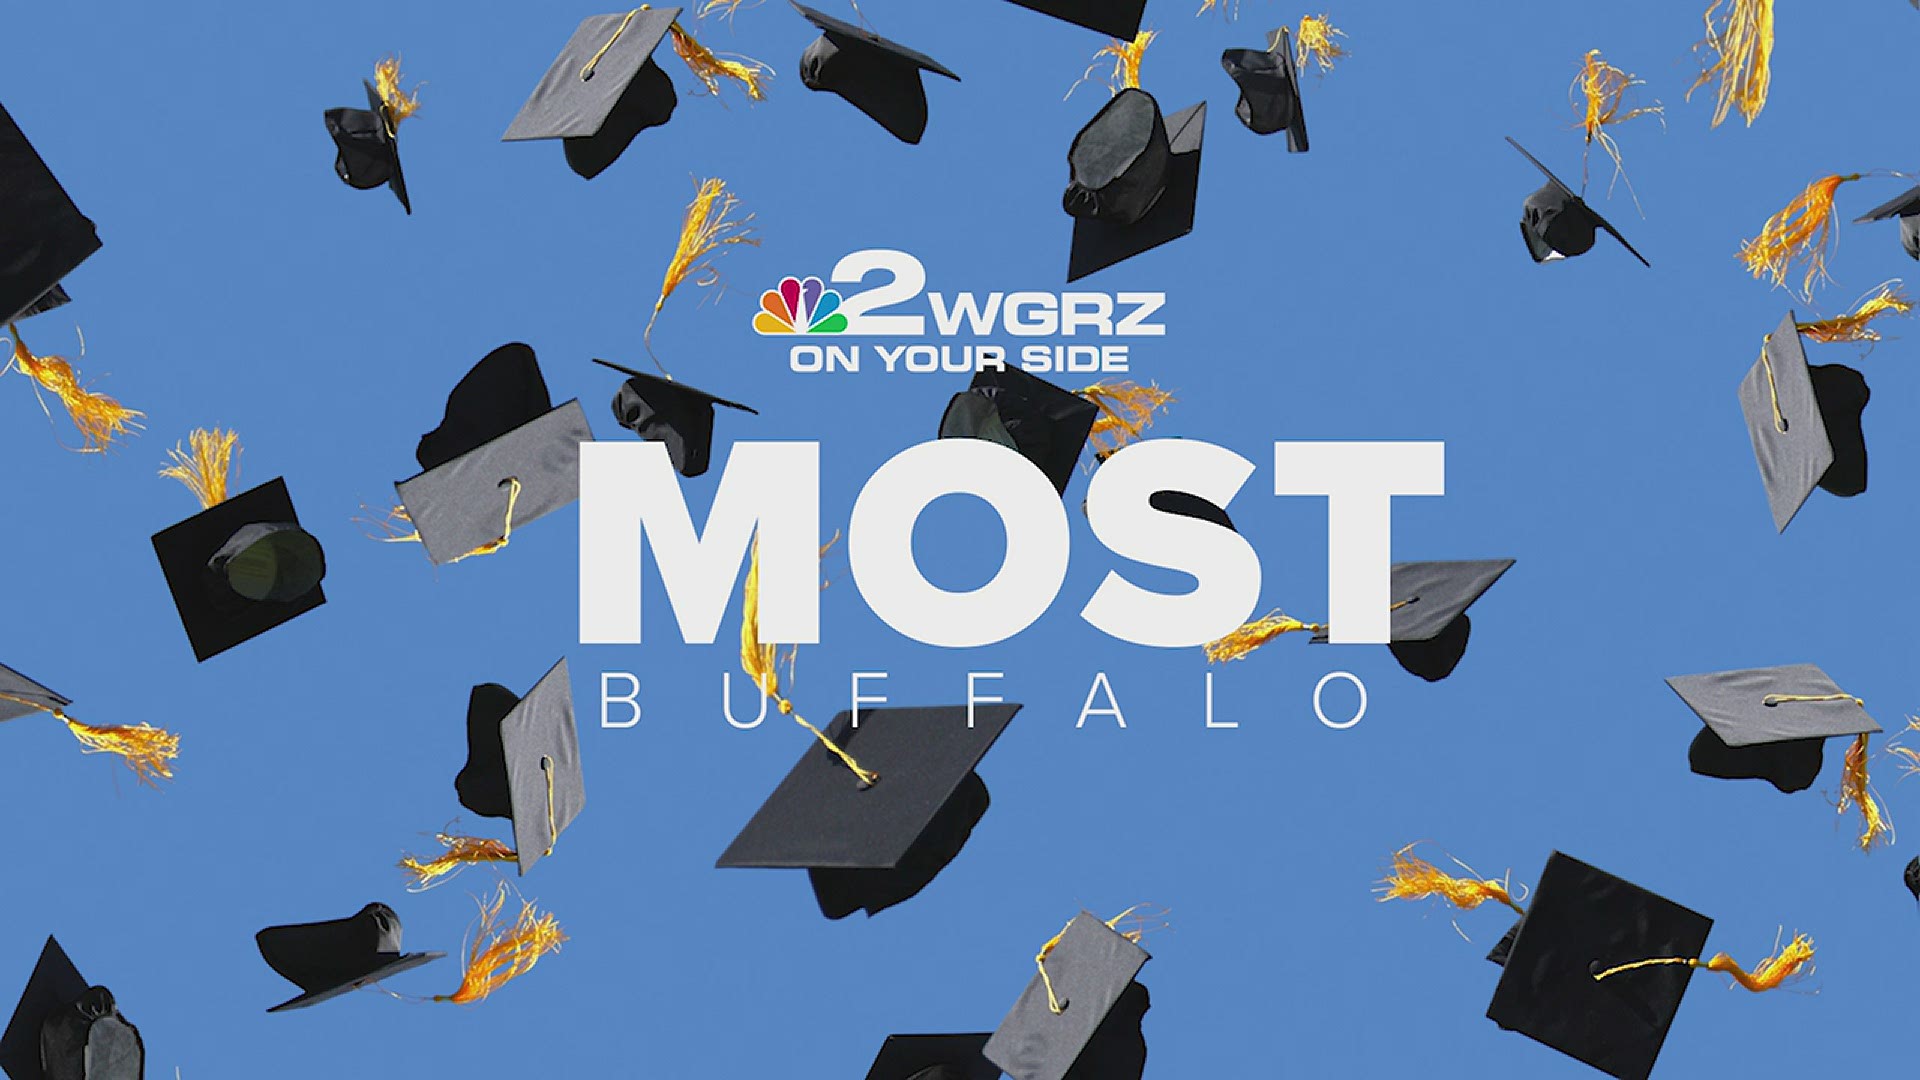 More Most Buffalo graduates!  Congratulations on your achievements!